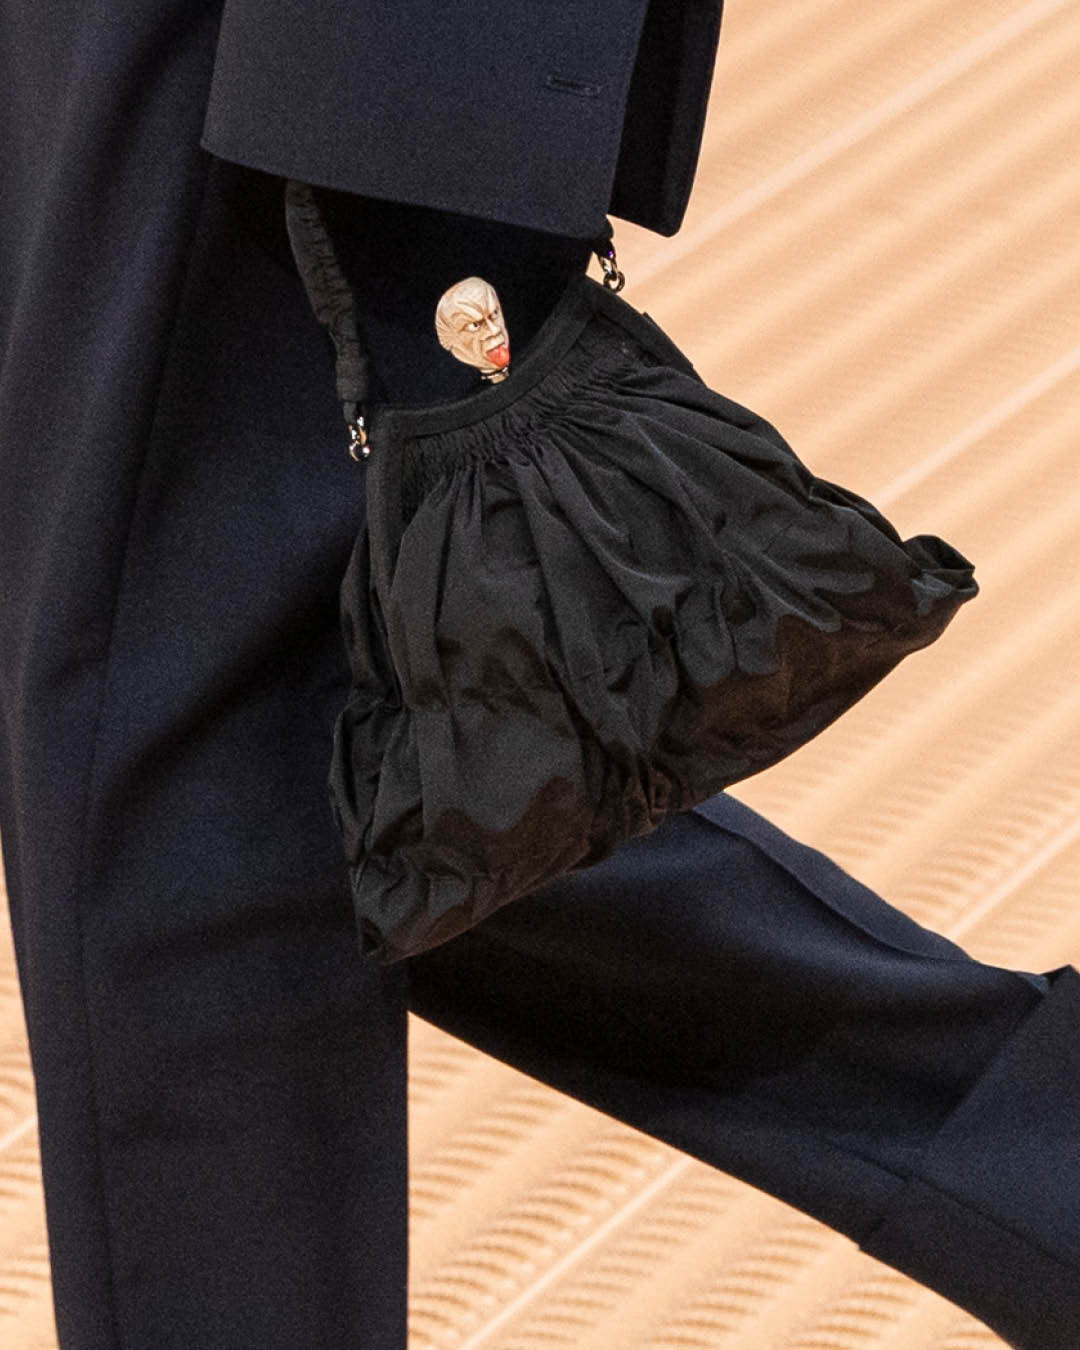 The Mario Prada handbag is presented alongside a minimalist Prada outfit, encapsulating the brand’s ethos of powerful understatement.
